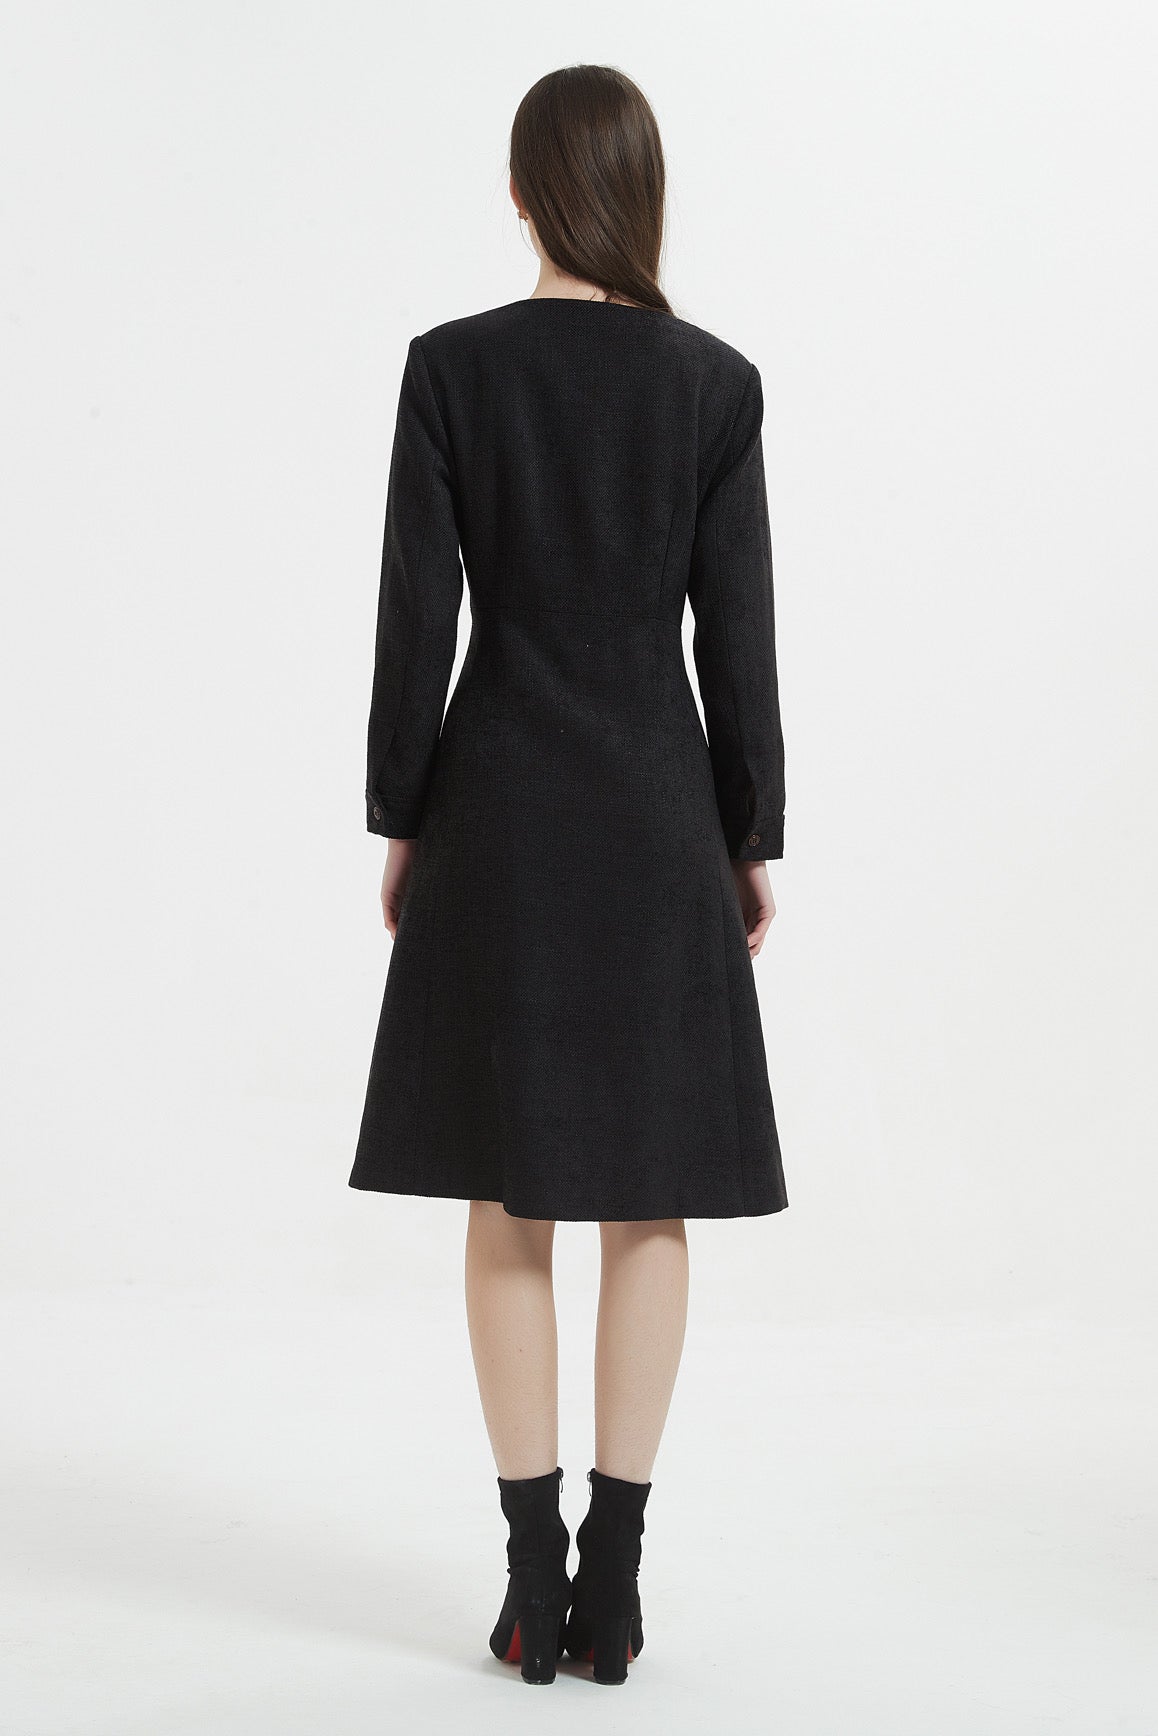 SKYE Shop Chic Modern Elegant Timeless Women Clothing French Parisian Minimalist Emilia Dress black 4